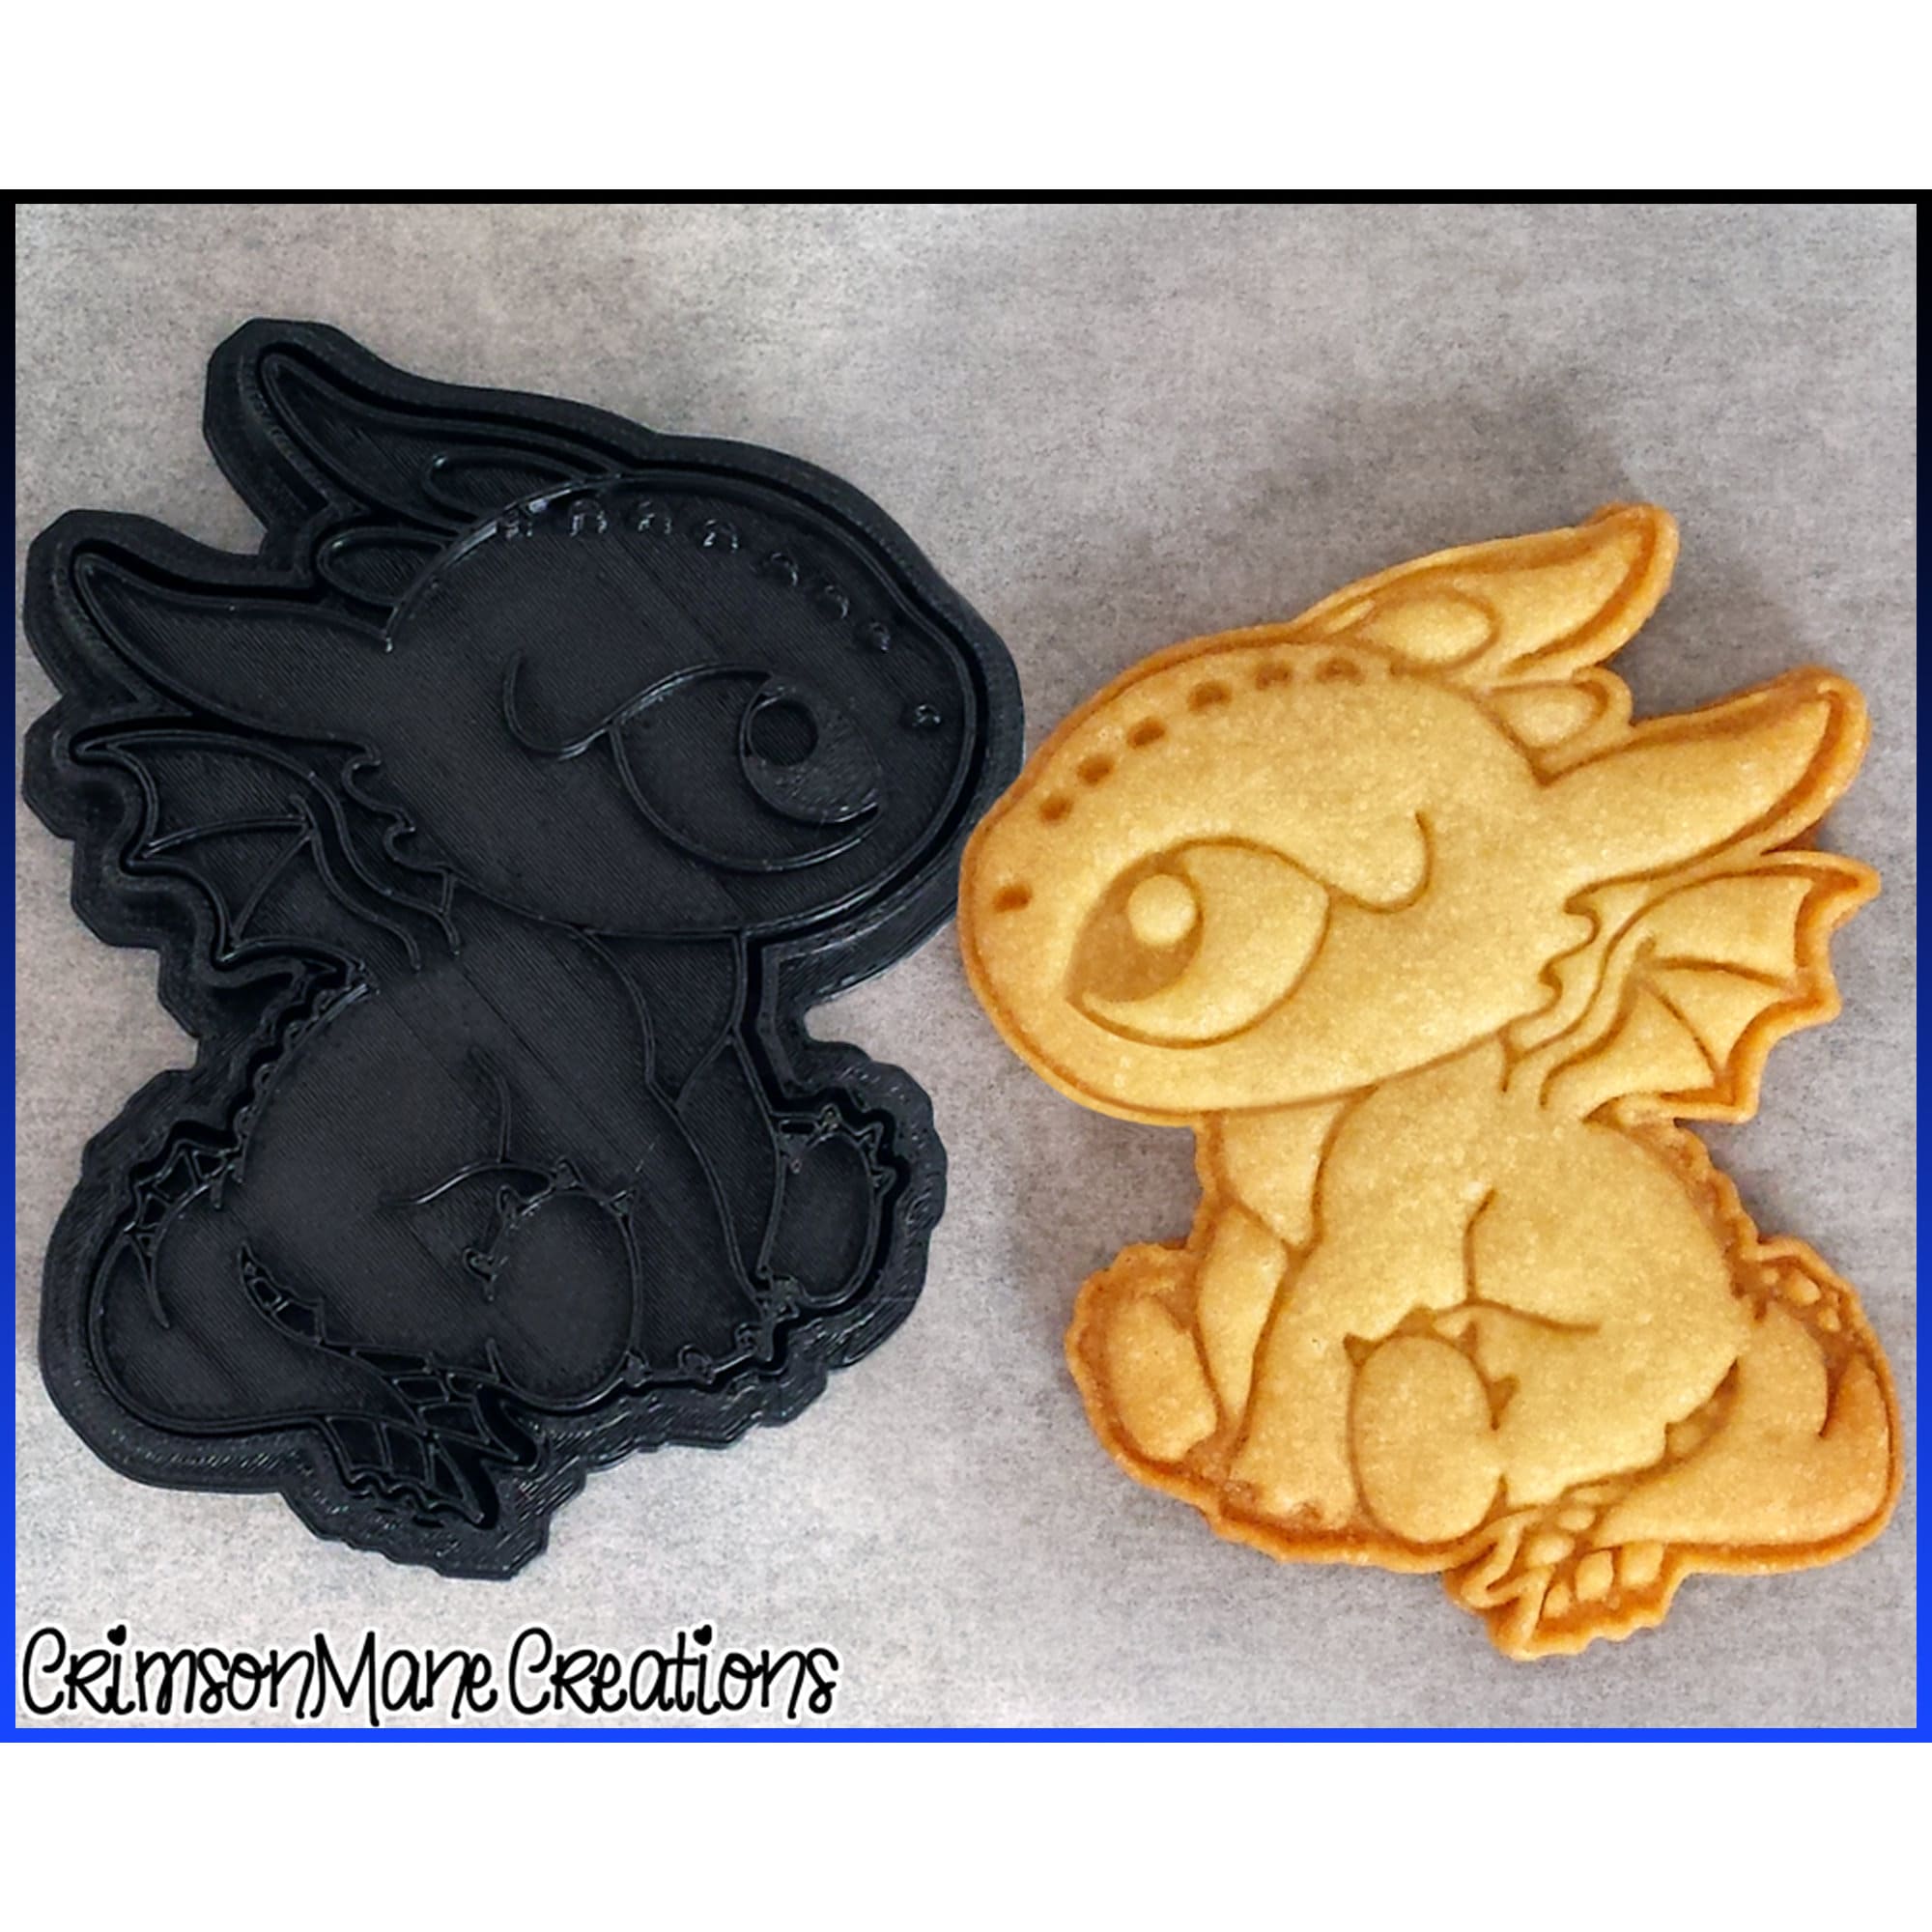 Flying Dragon Silicone Mold-dragon Claw Resin Mold-dragon Fondant Mold-chocolate  Cake Decor Mold-jewelry Charm Mold-epoxy Resin Art Mold 